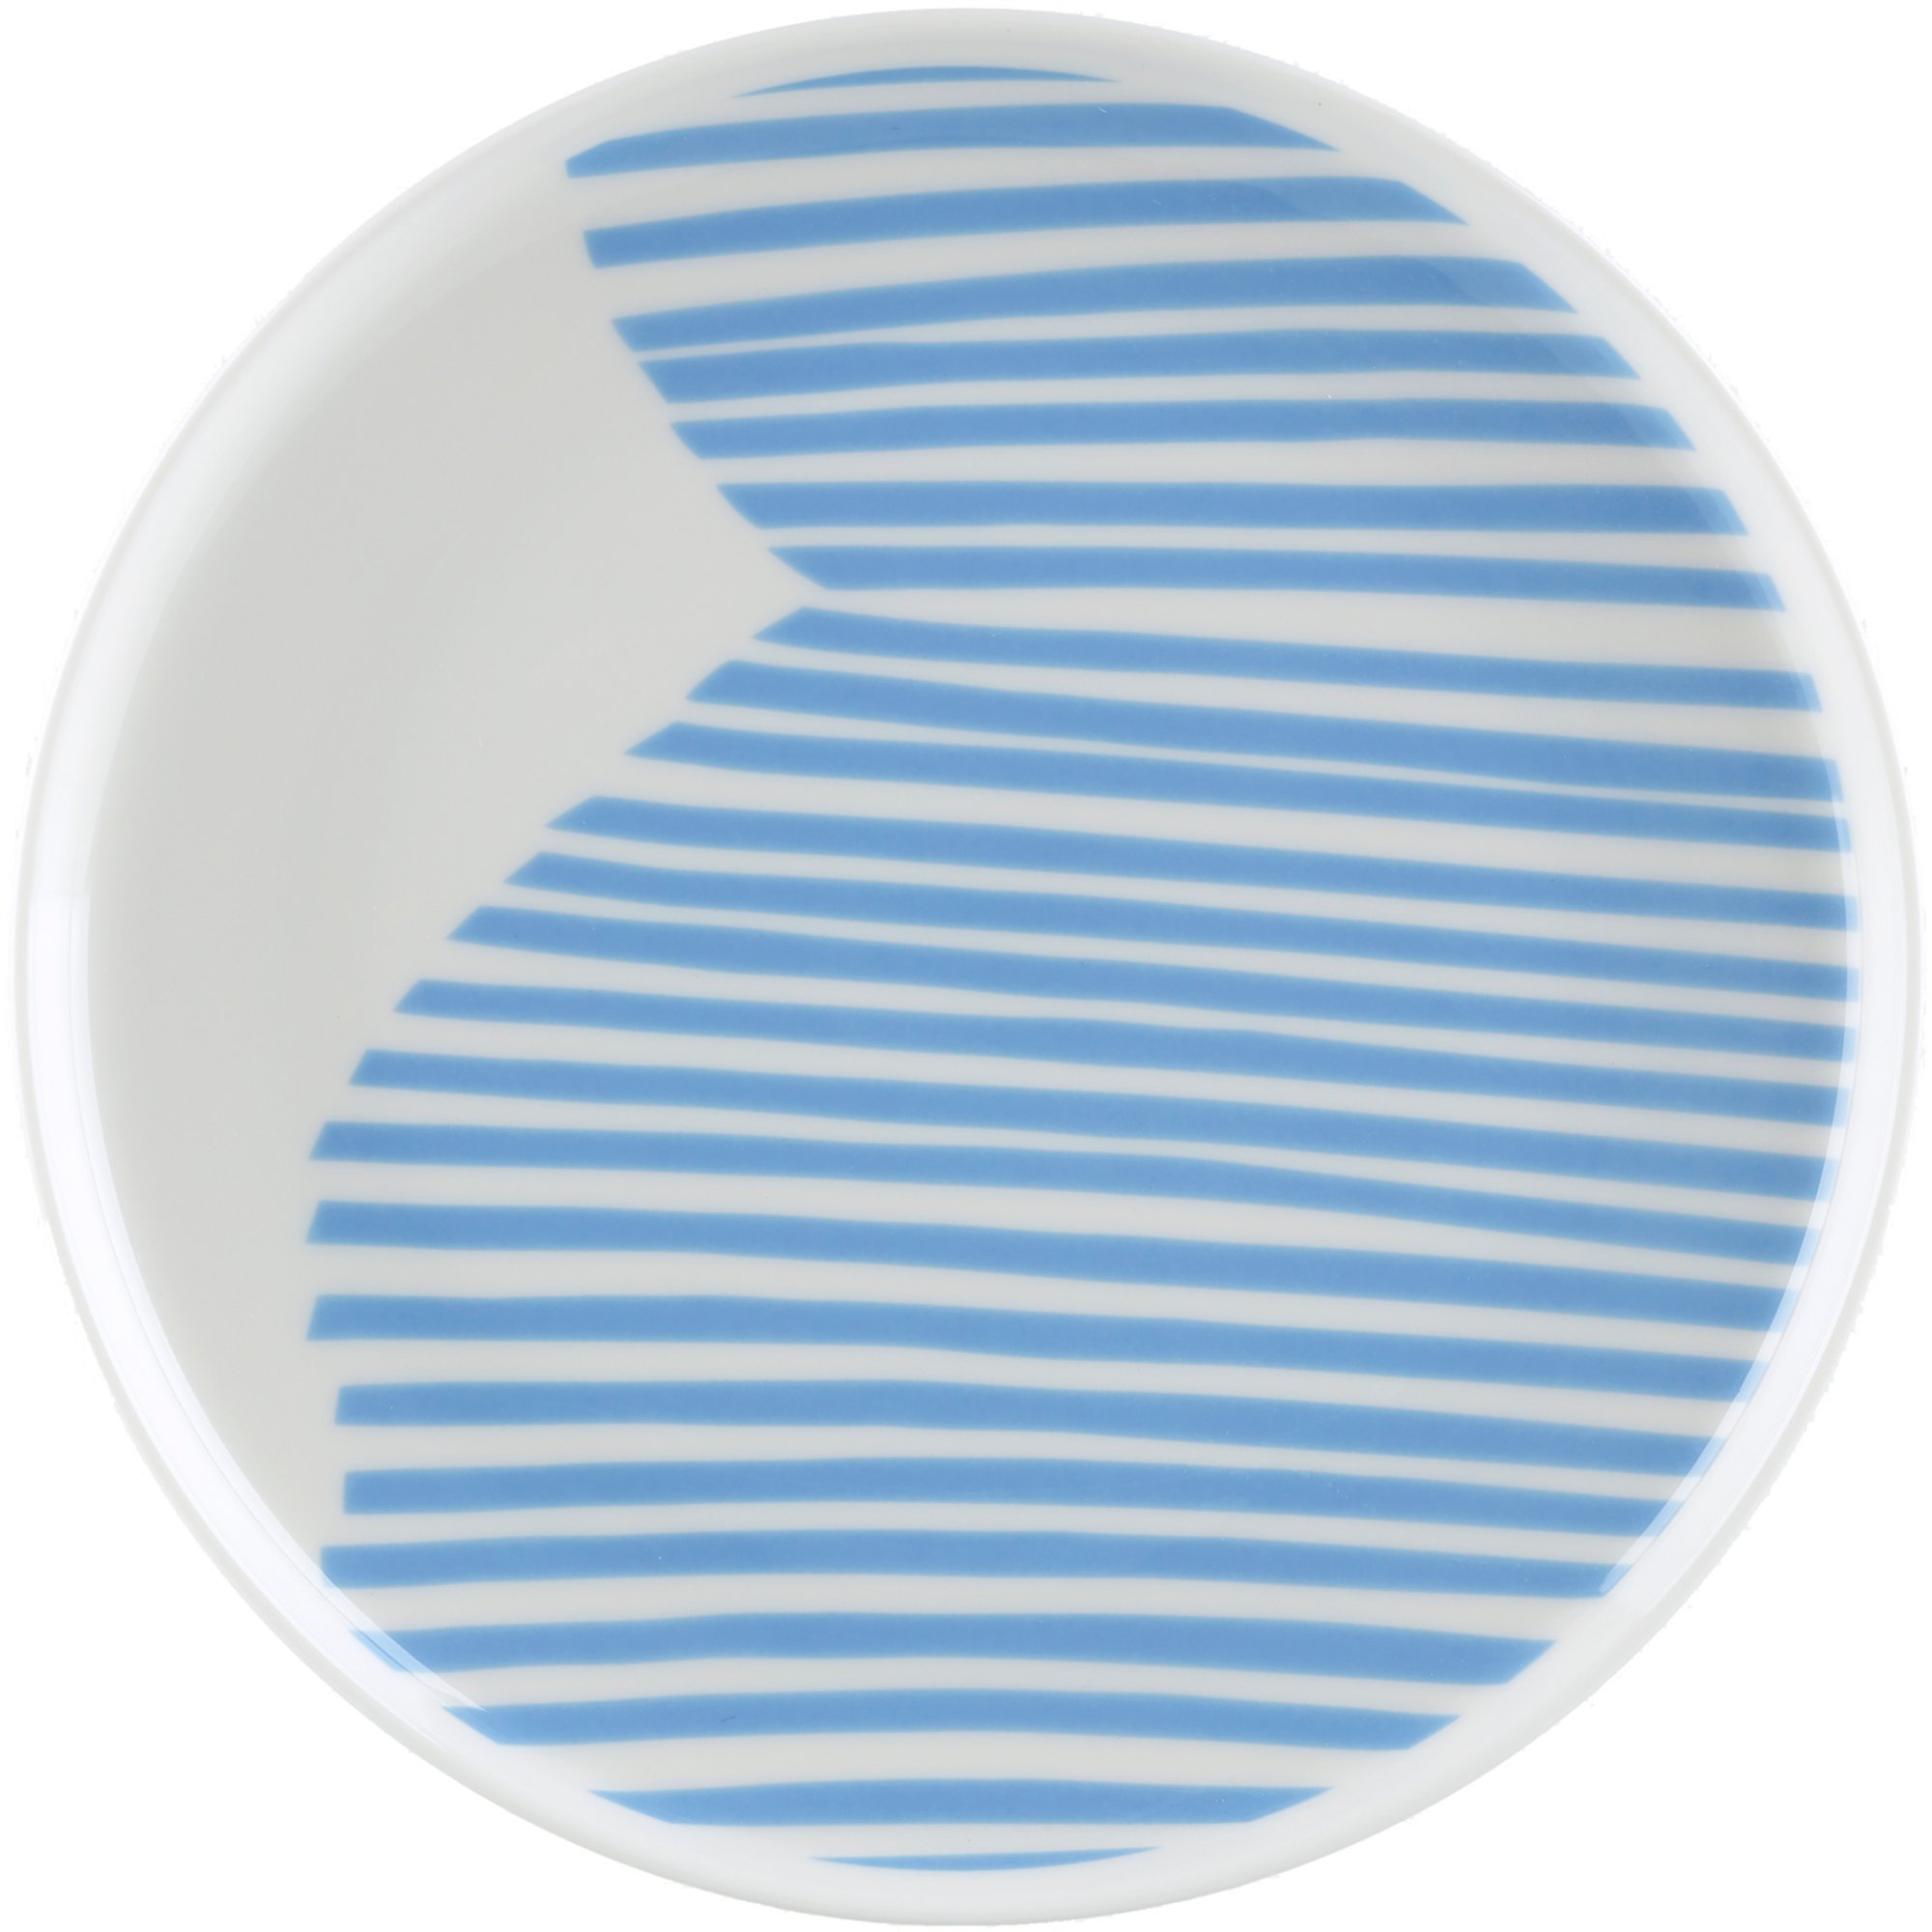 Marimekko Uimari tallerken, Ø 20 cm, hvid/lyseblå